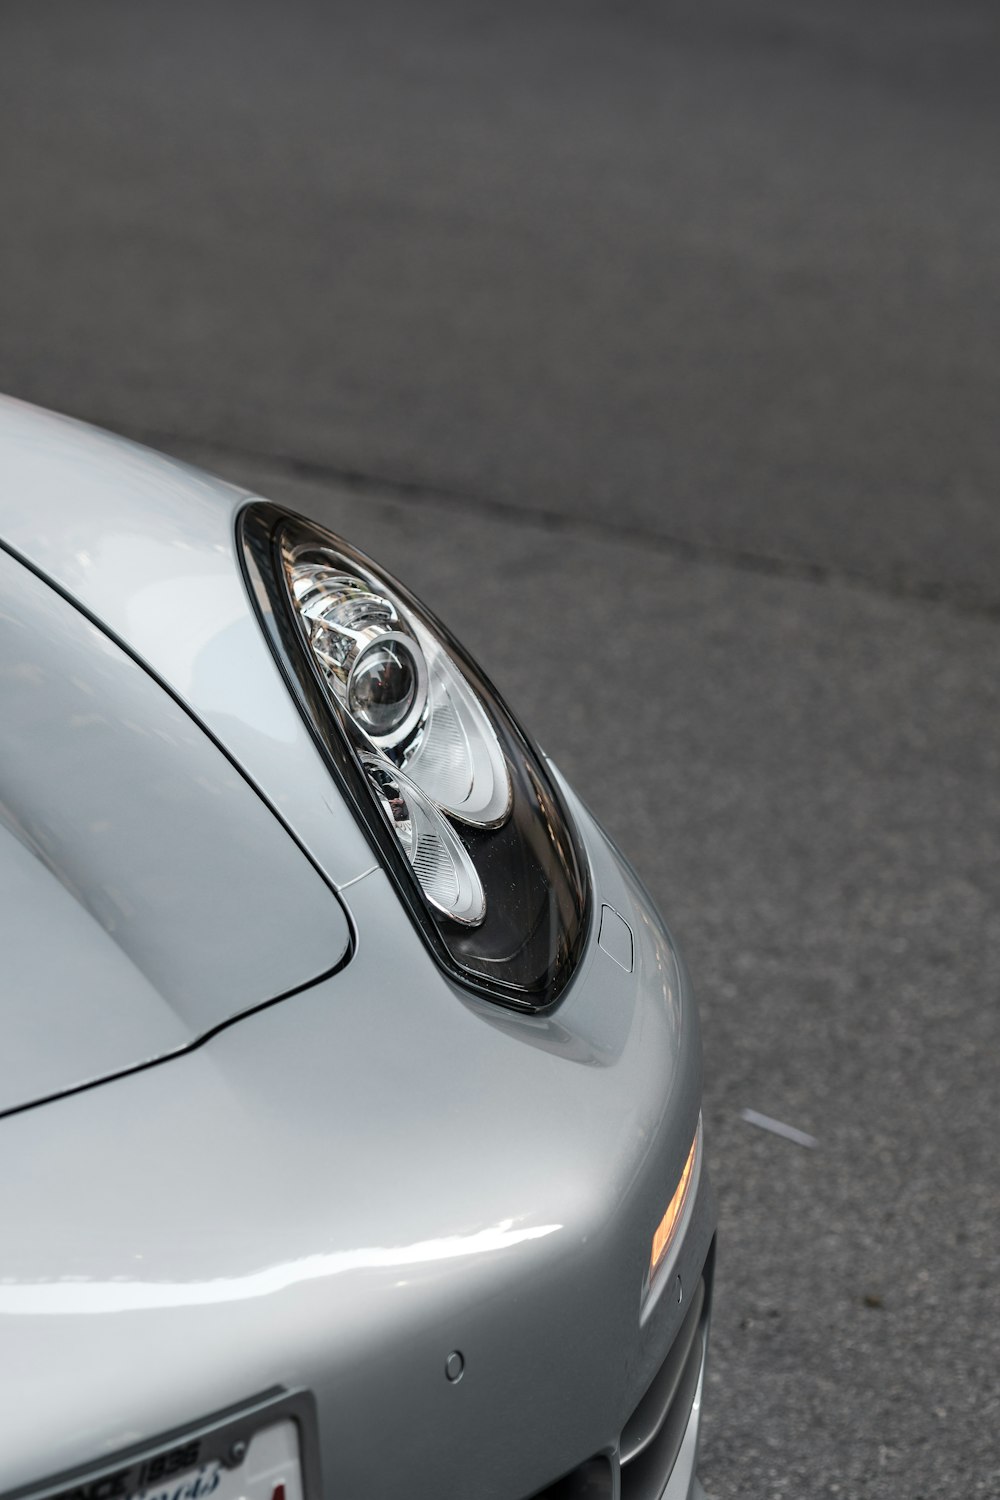 grayscale photo of car headlight